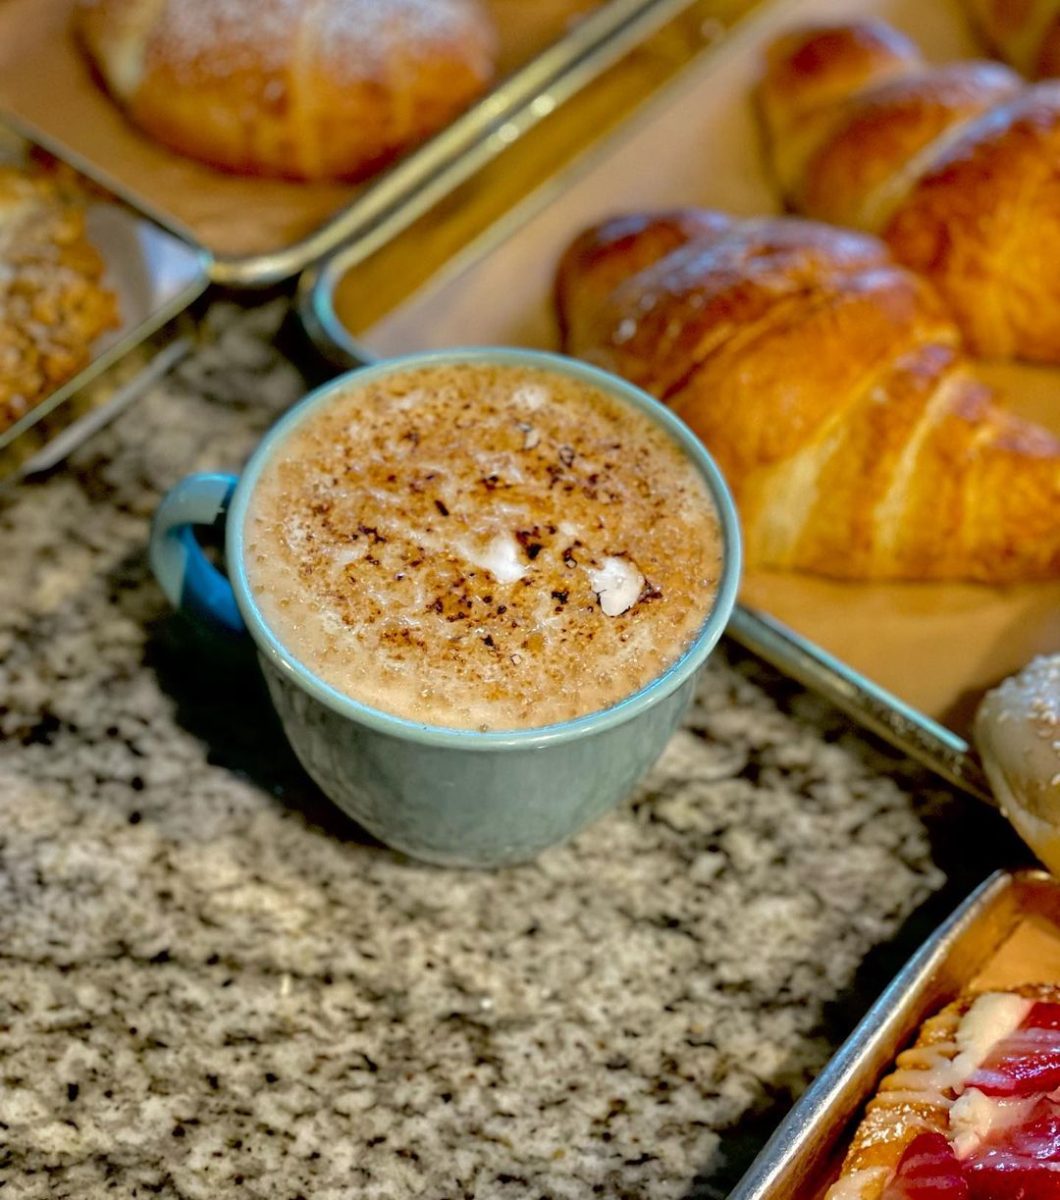 Best coffee shops in sacramento, barrio sacramento creme brulee latte